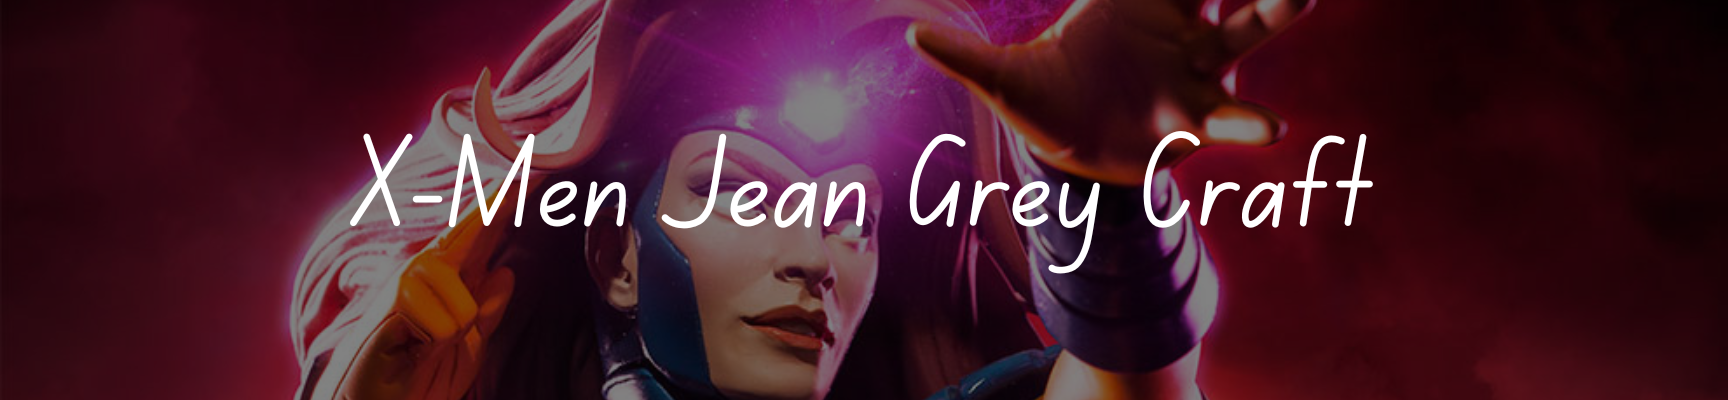 X-Men Jean Grey Craft